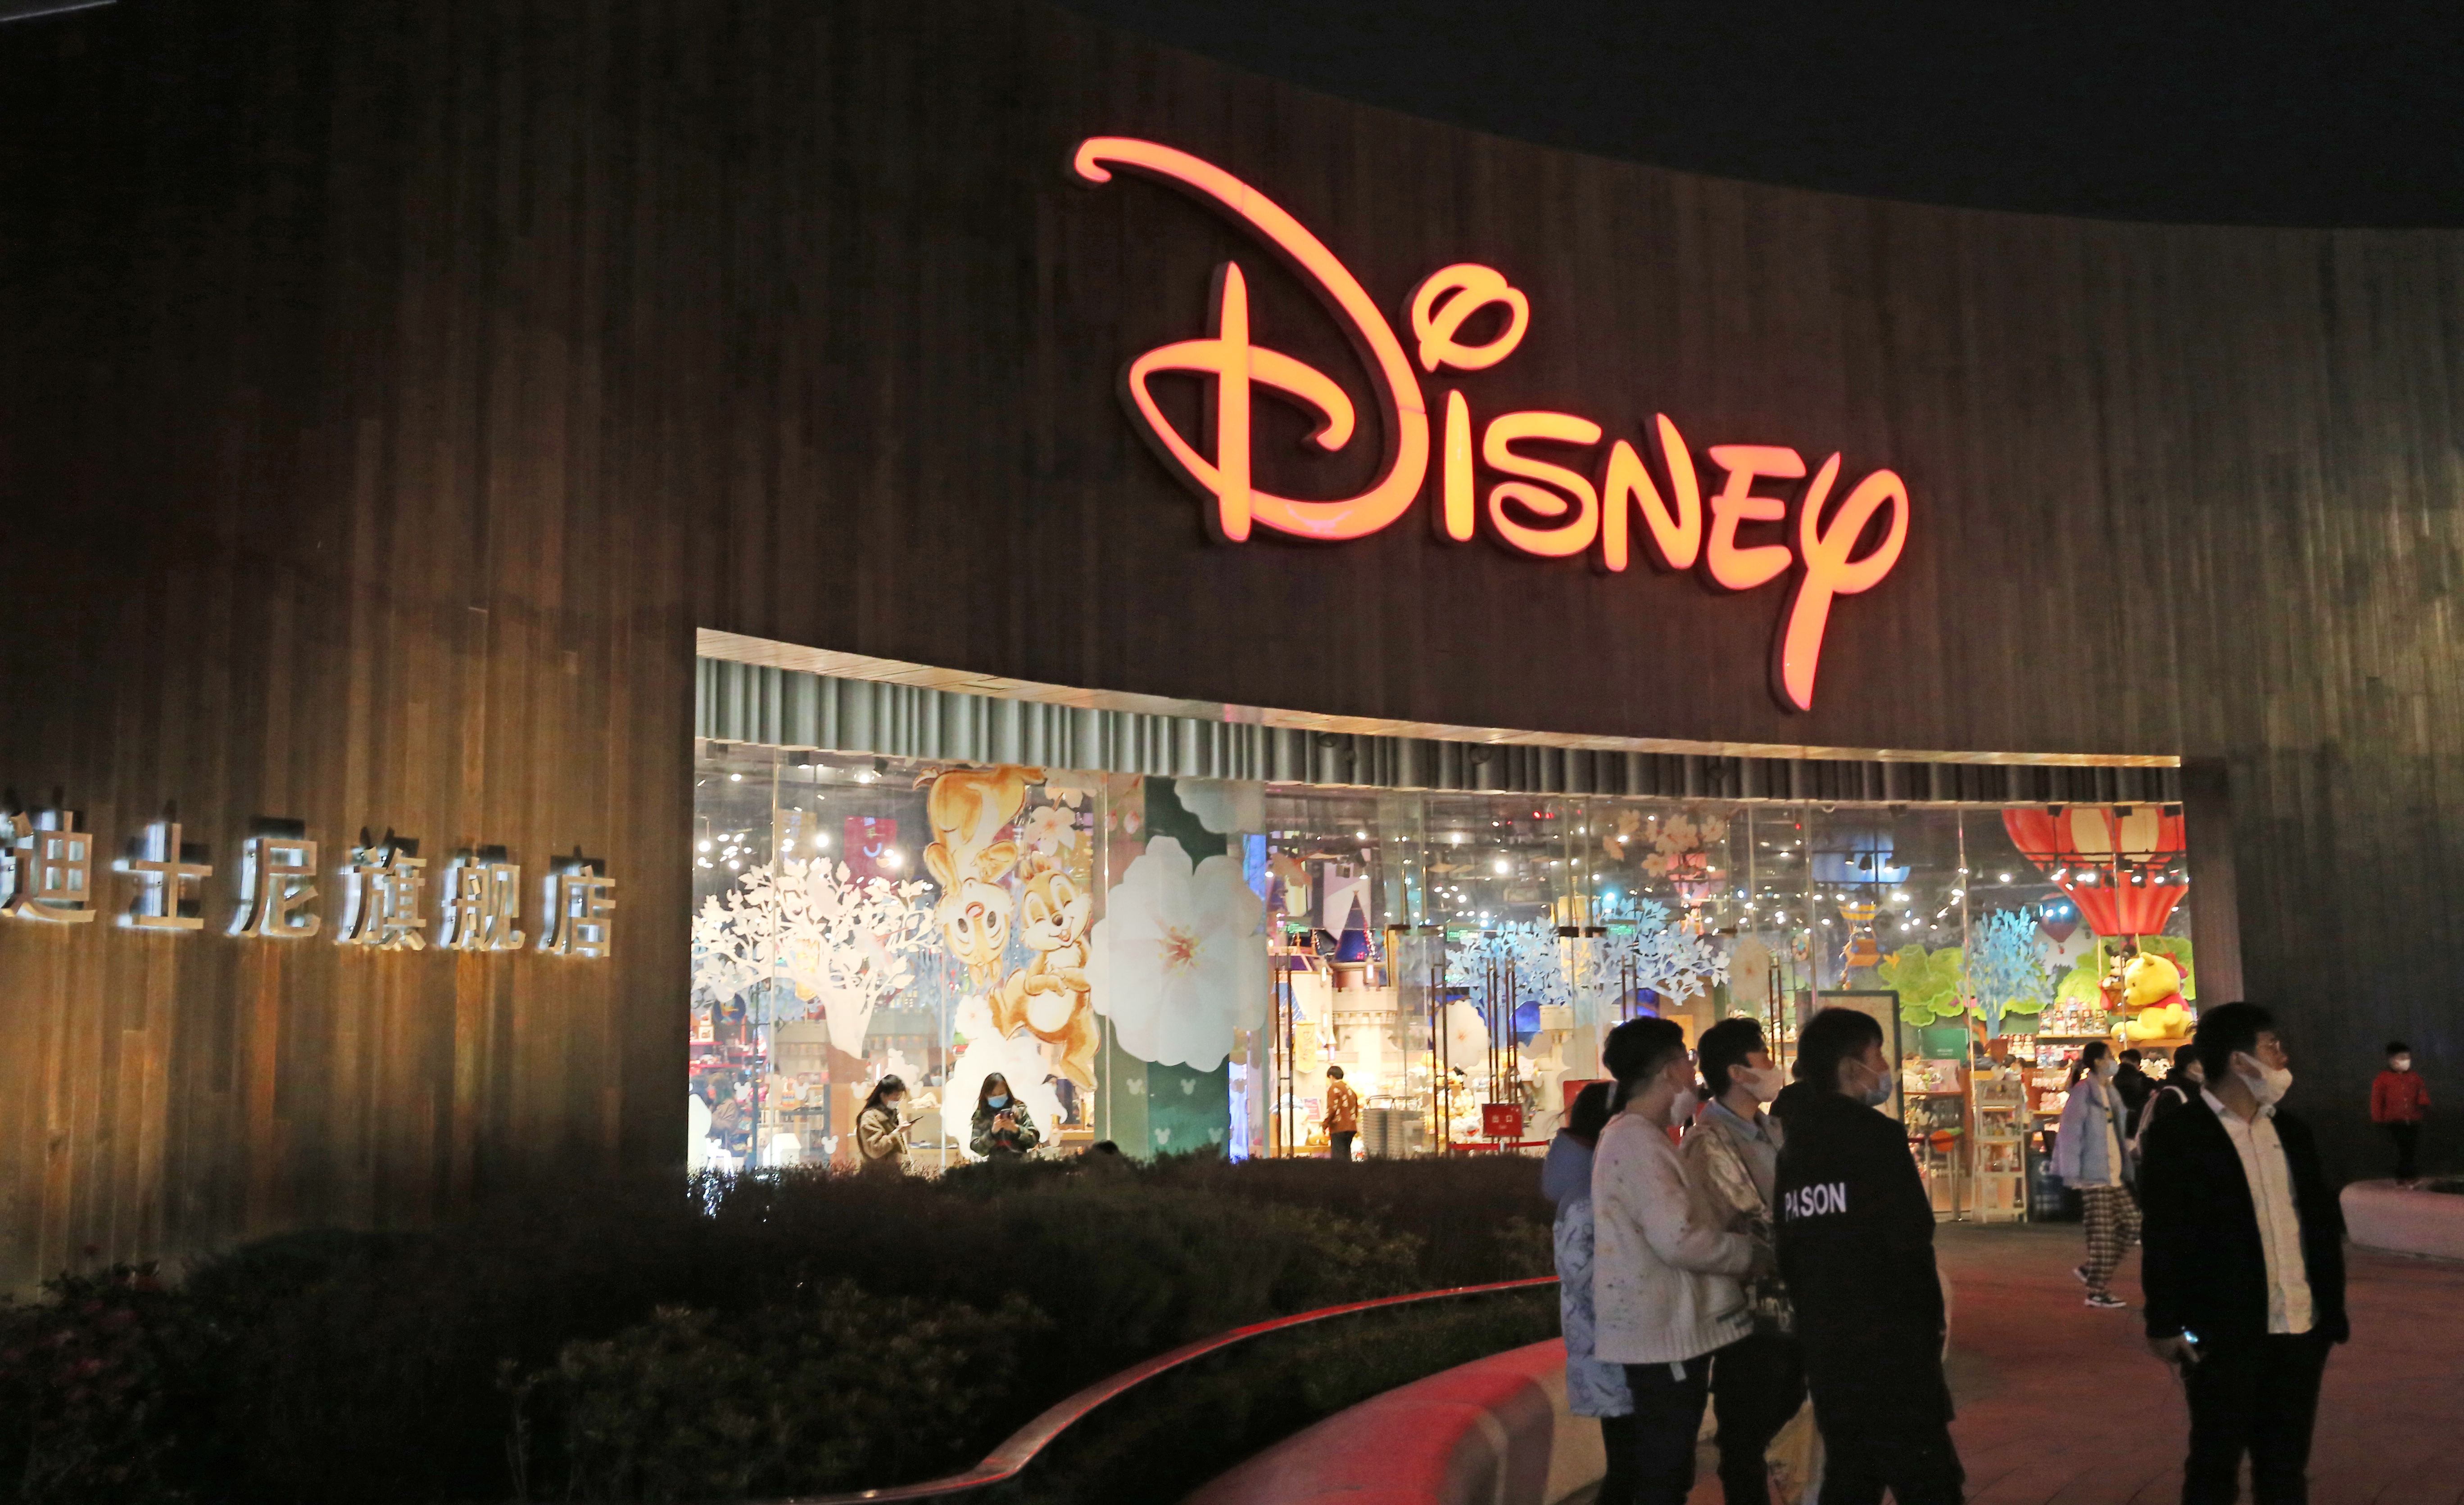 Disney logo in China